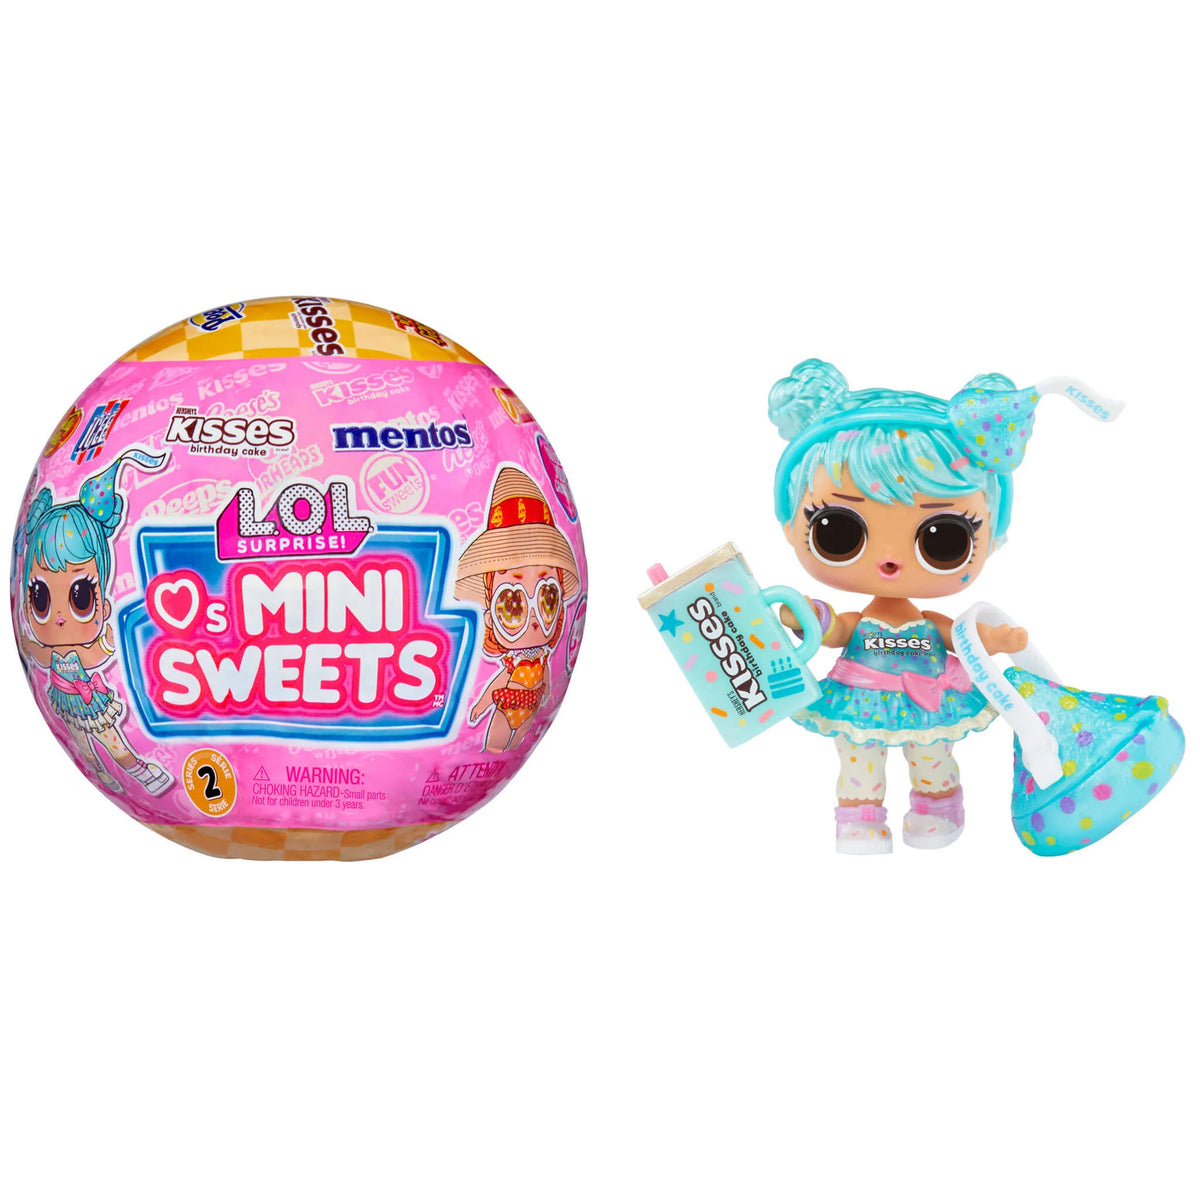 L.O.L. Surprise Loves Mini Sweets S2